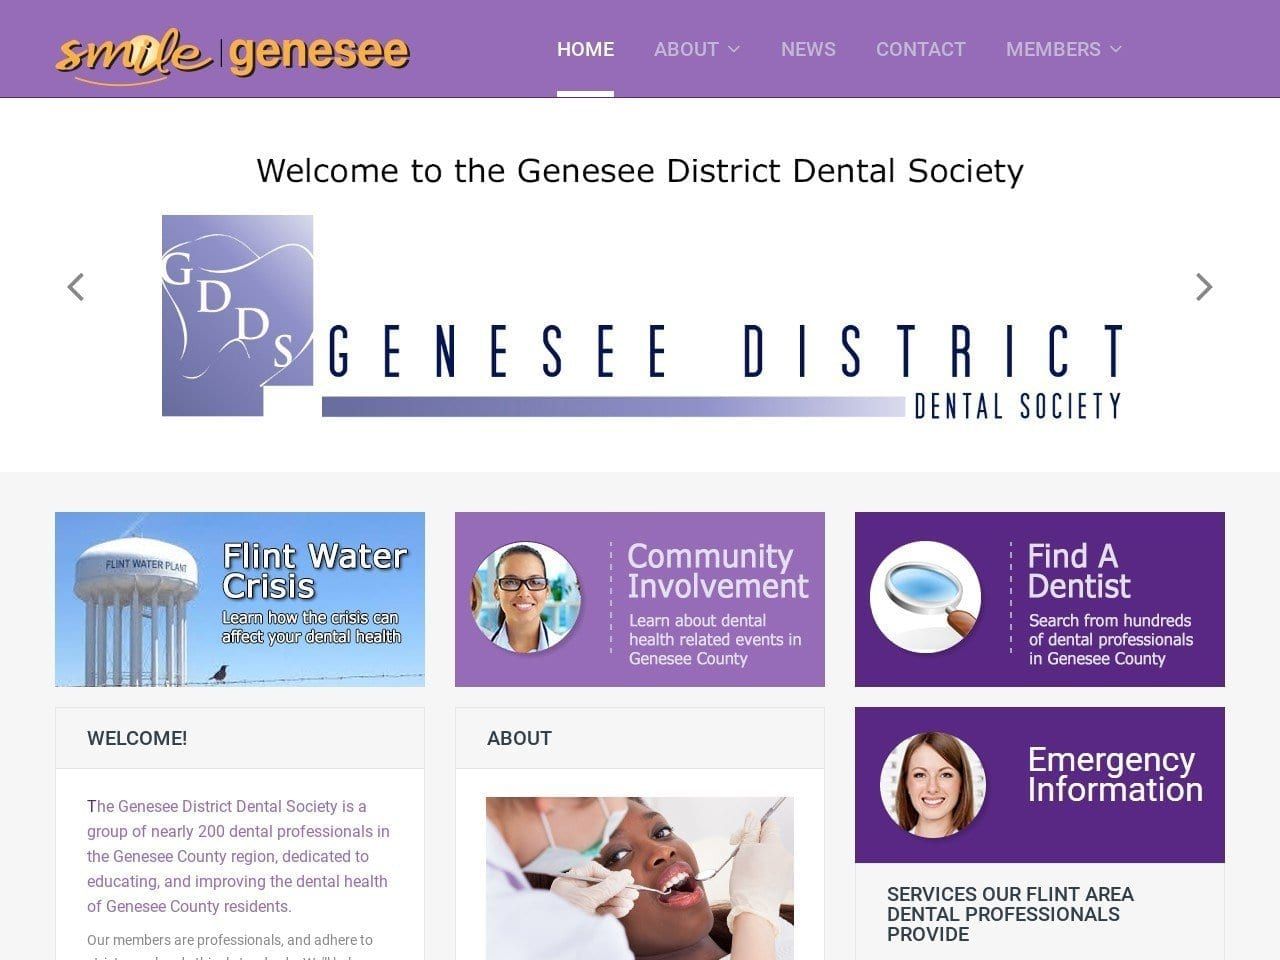 Genesee District Dental Society Website Screenshot from smilegenesee.com